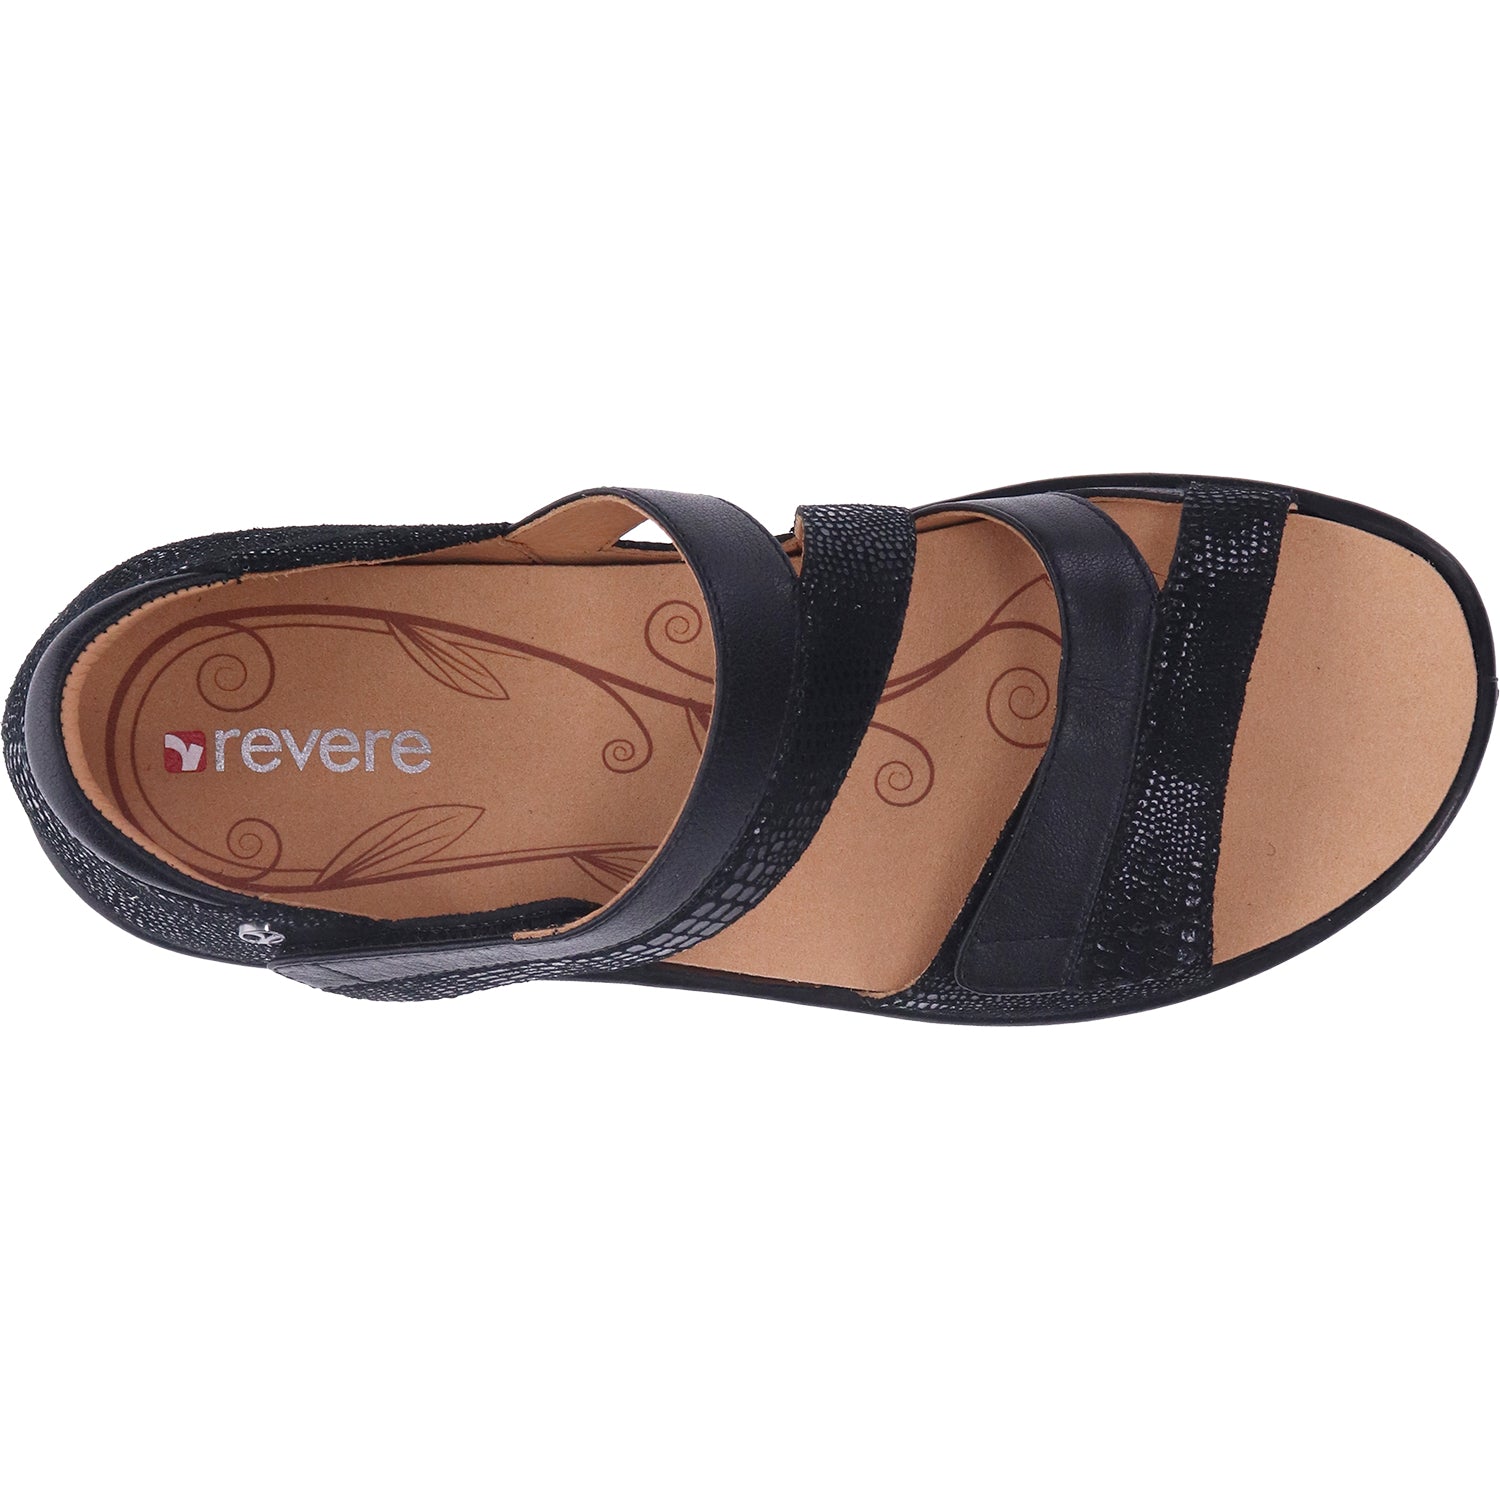 Revere Mauritius | Women's Ankle Strap Sandals | Footwear etc.